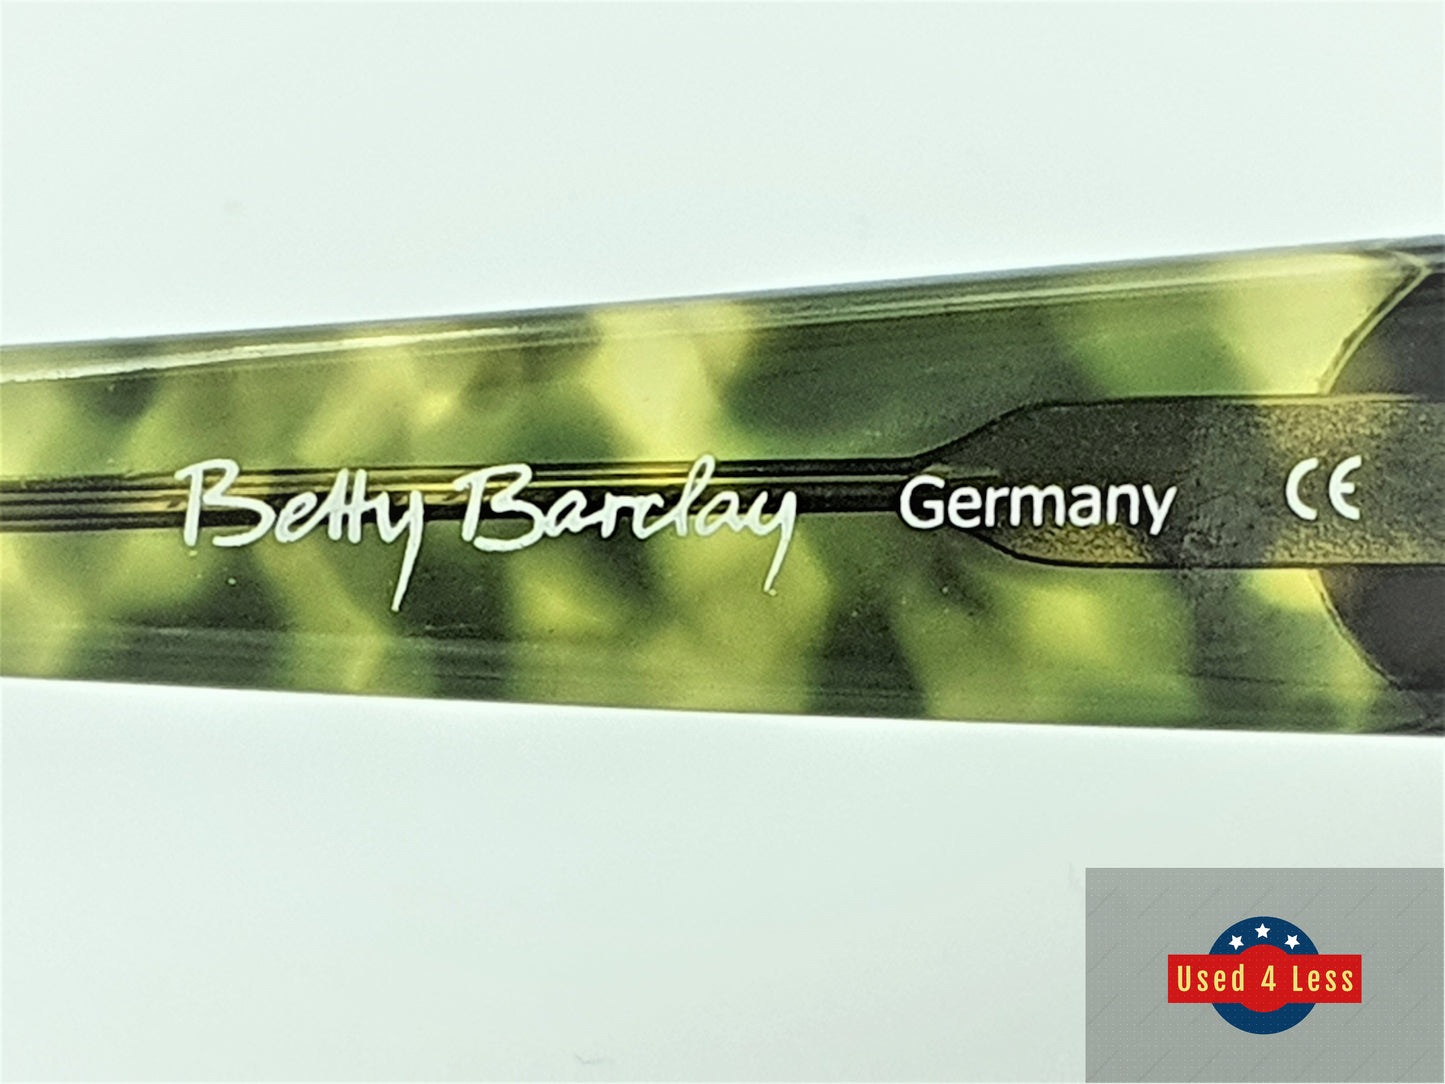 Betty Barclay model BB3013 Col. 660